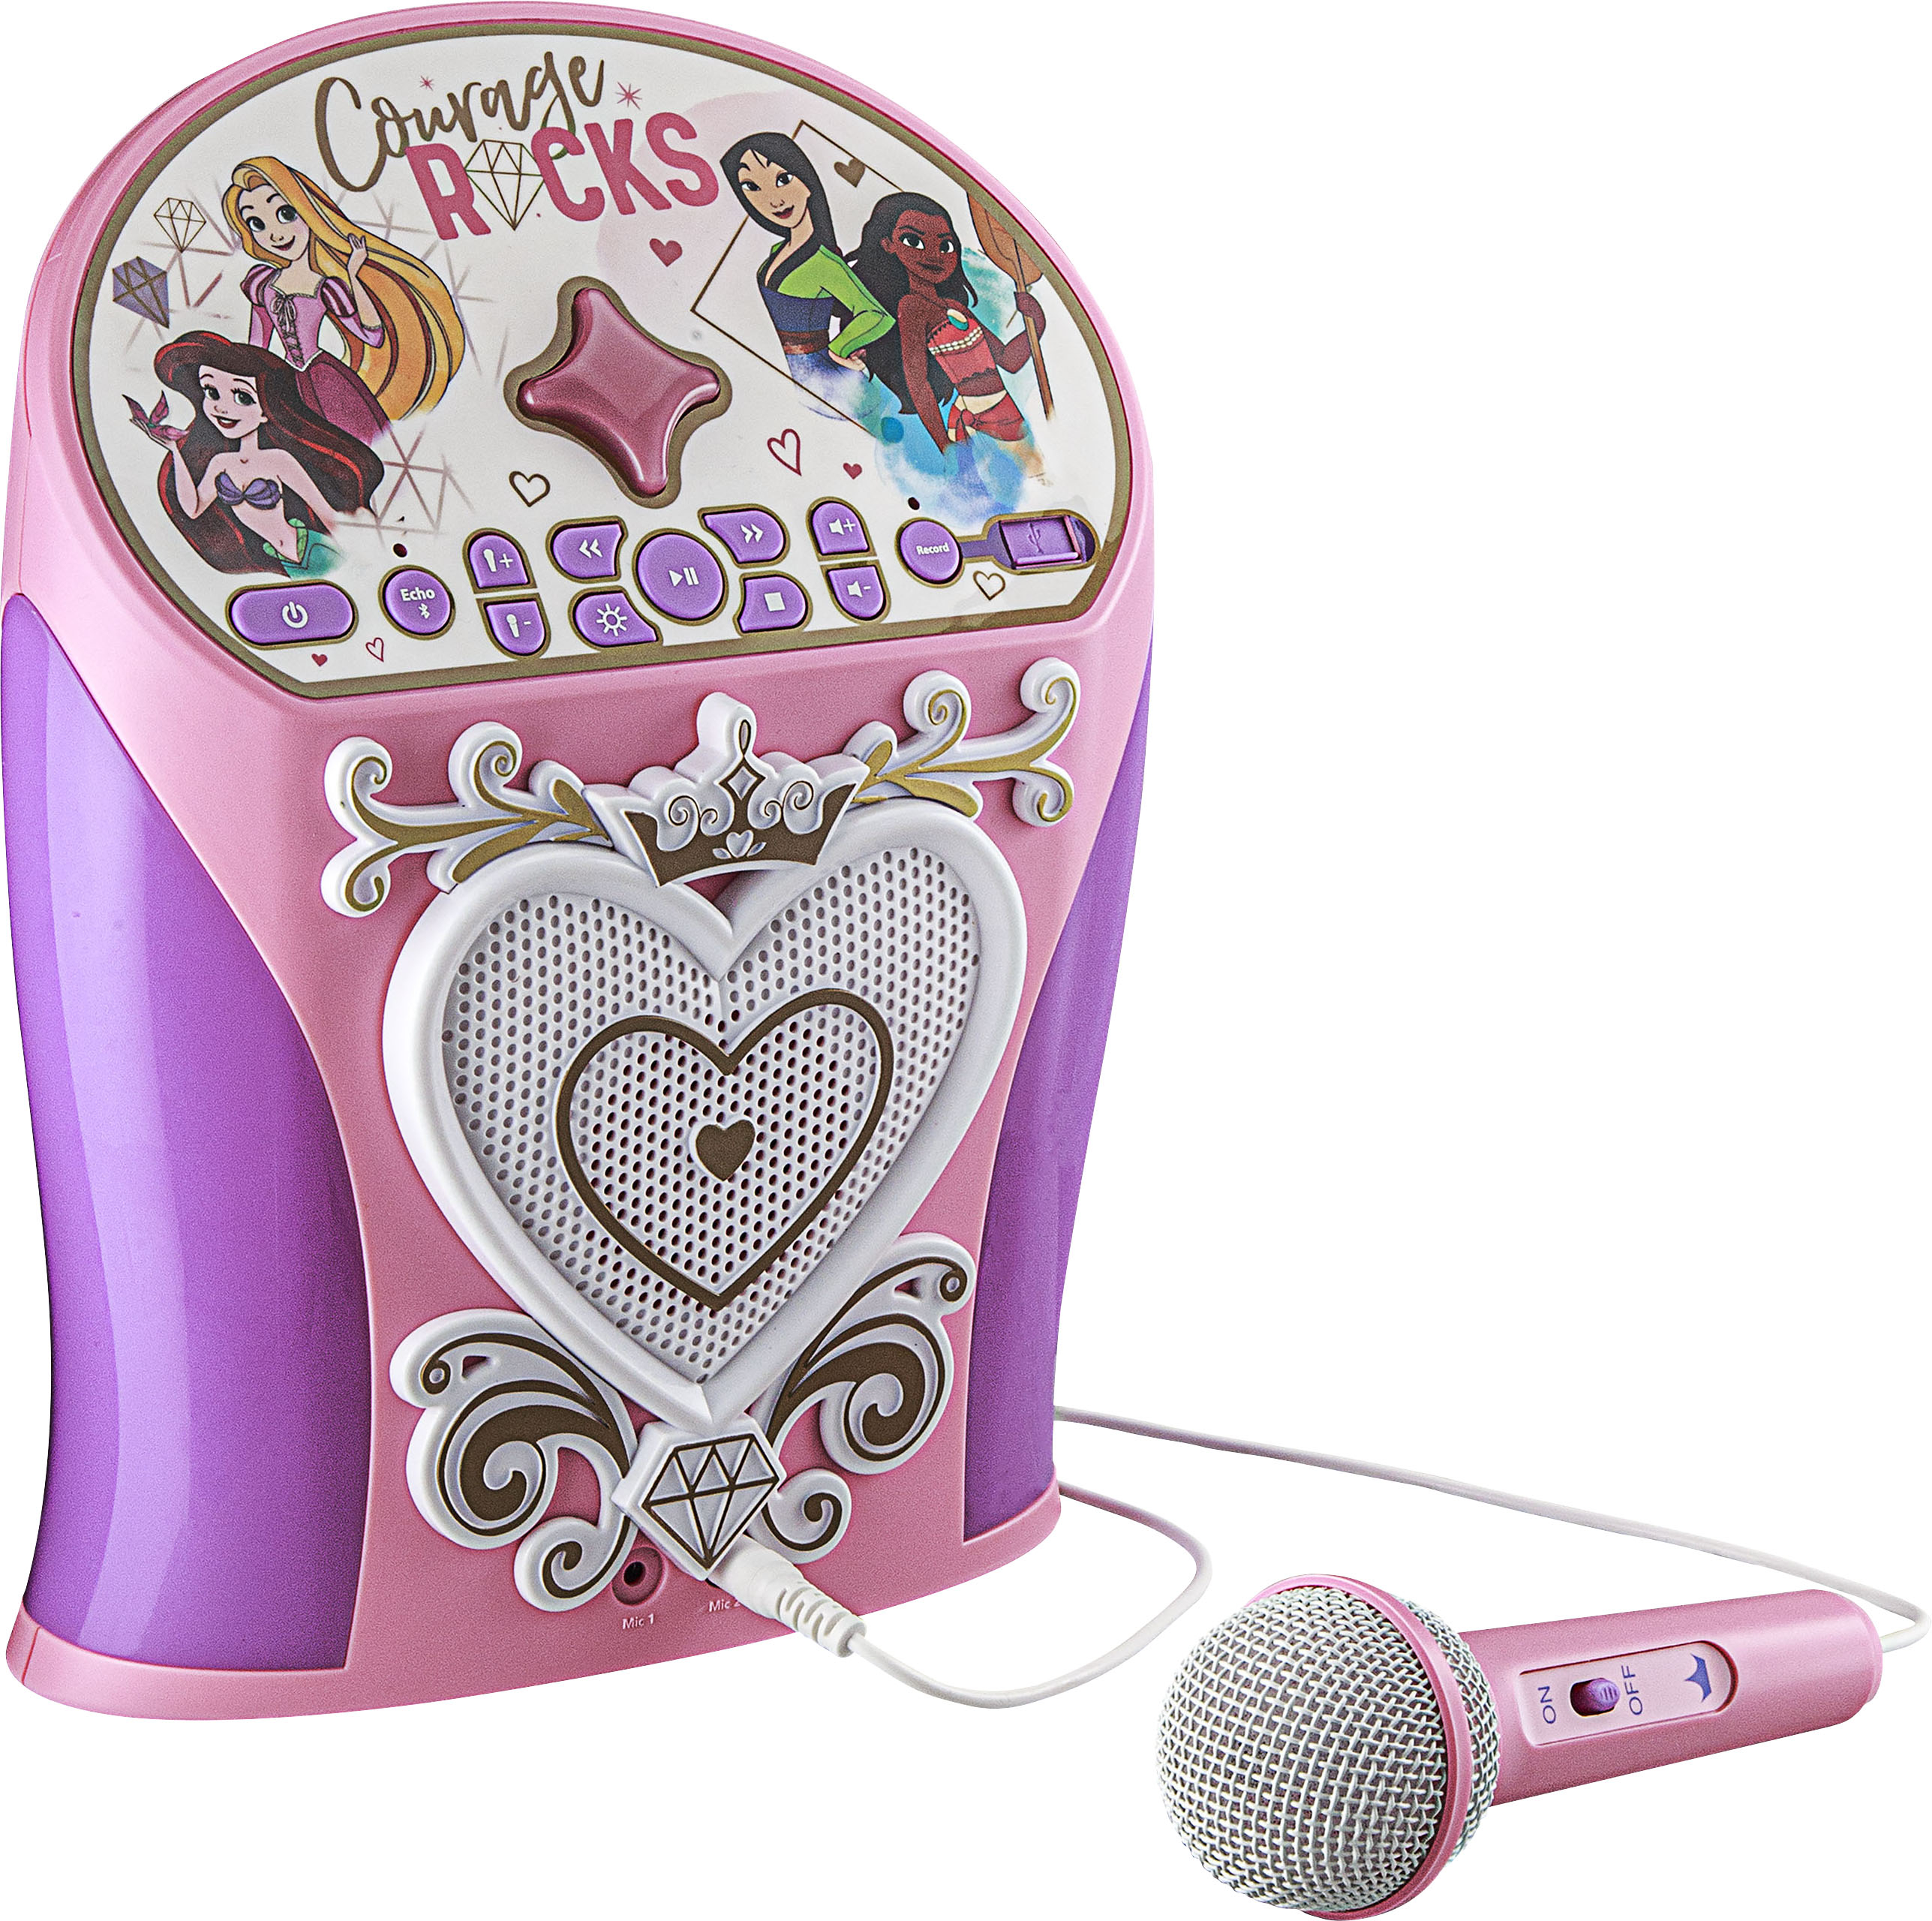 Angle View: eKids - Disney Princess Bluetooth Karaoke with EZ Link Technology - Pink